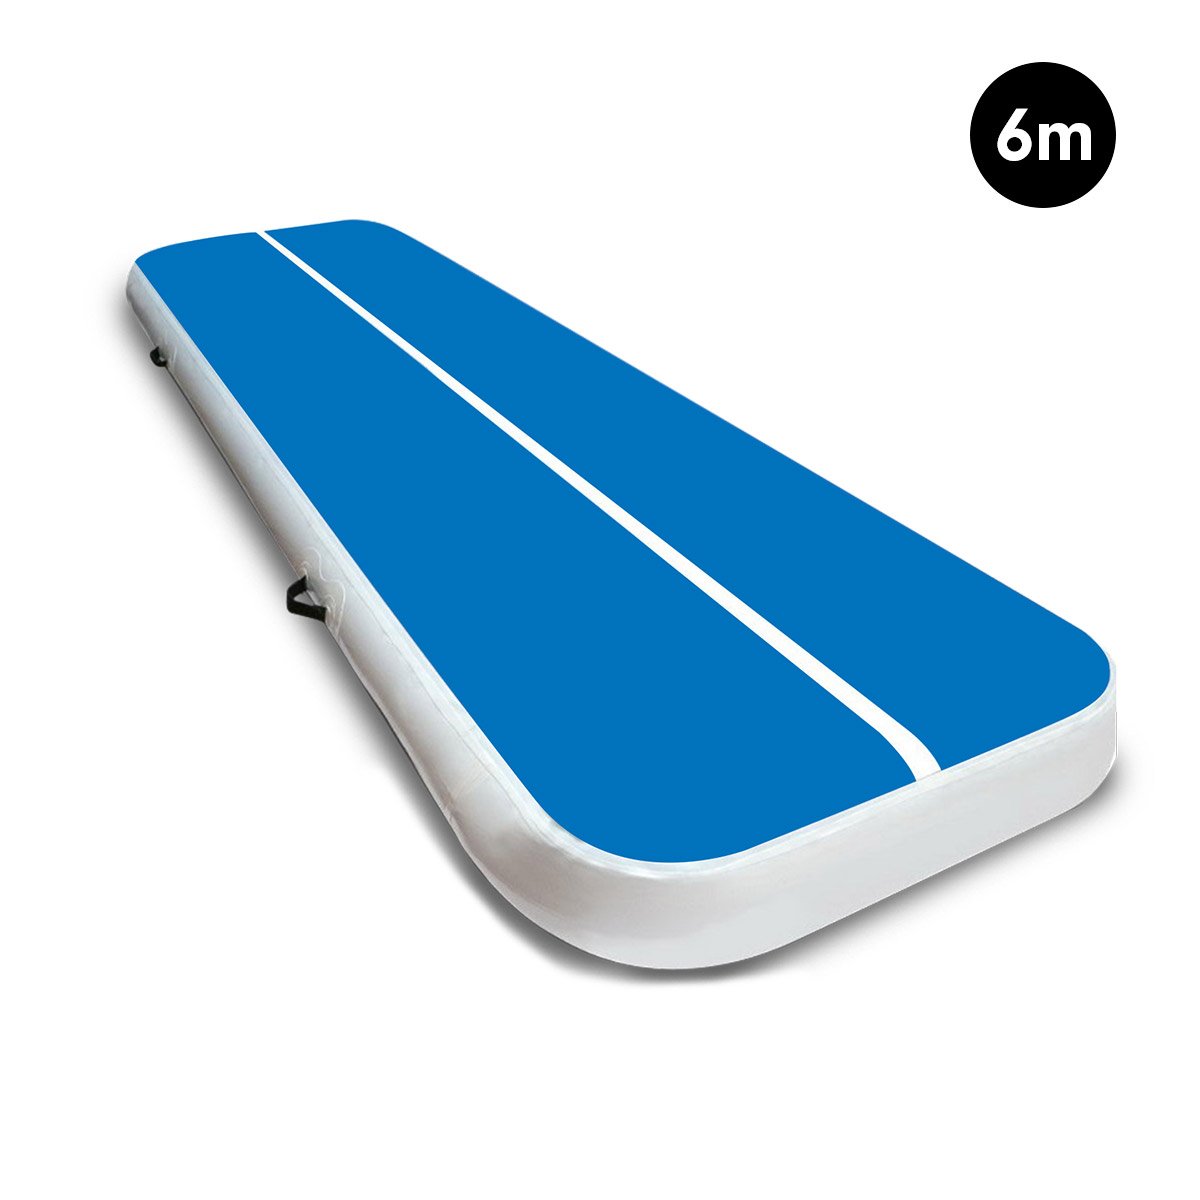 6m x 1m Air Track Inflatable Tumbling Gymnastics Mat - Blue White